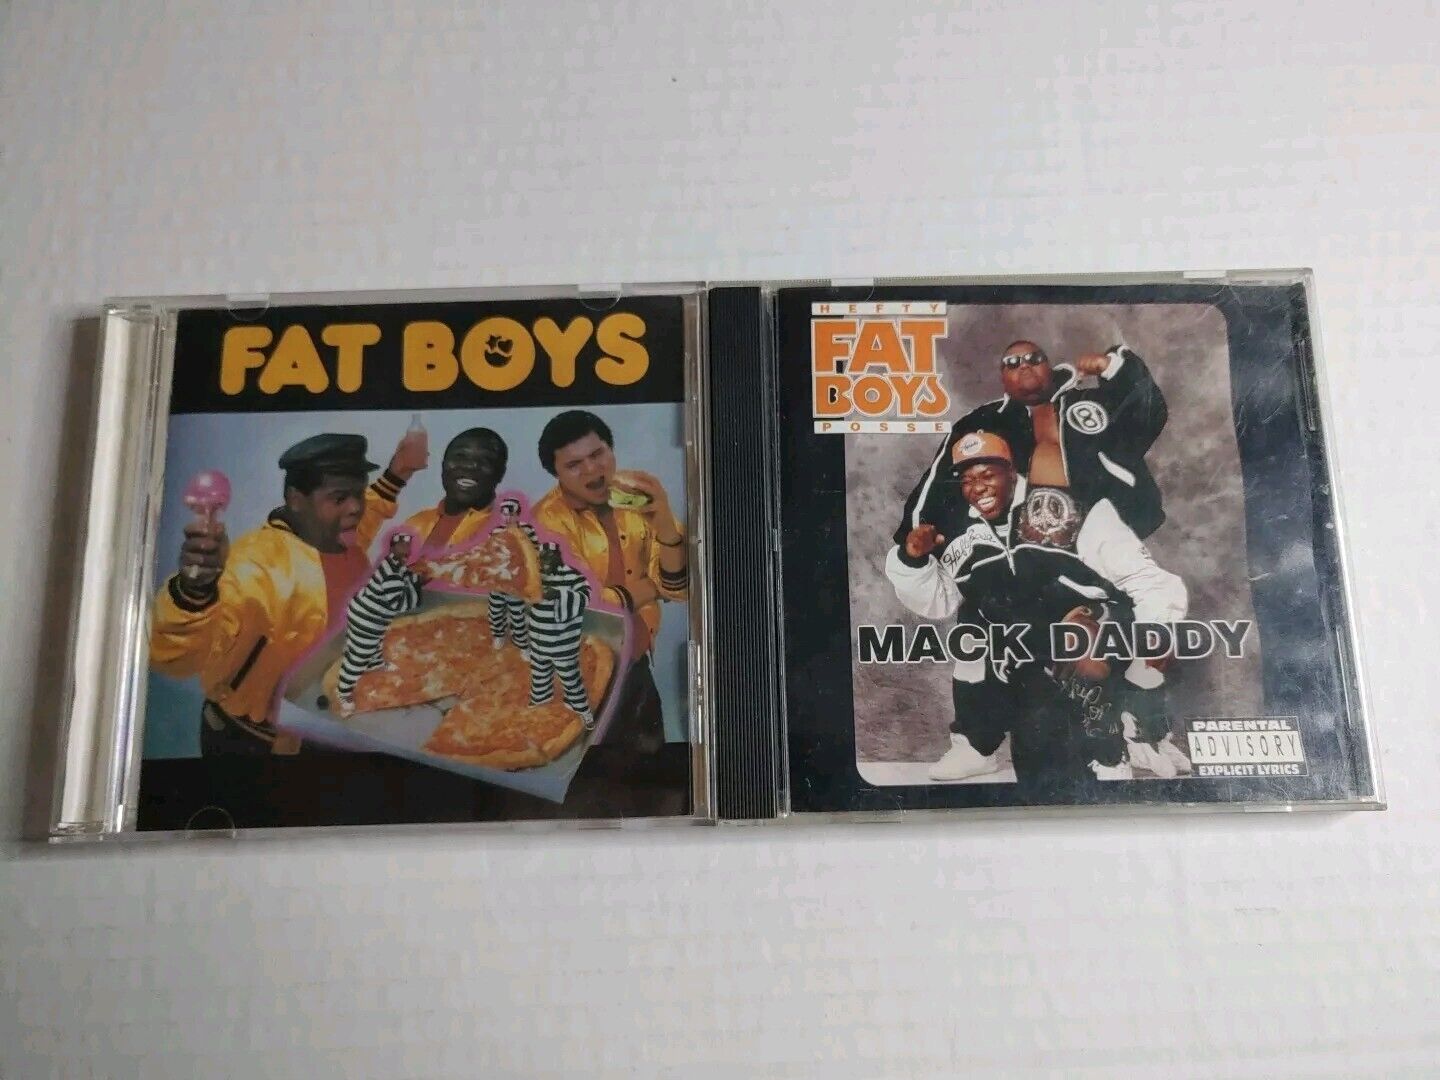 THE FAT BOYS - Fat Boys - CD - RARE